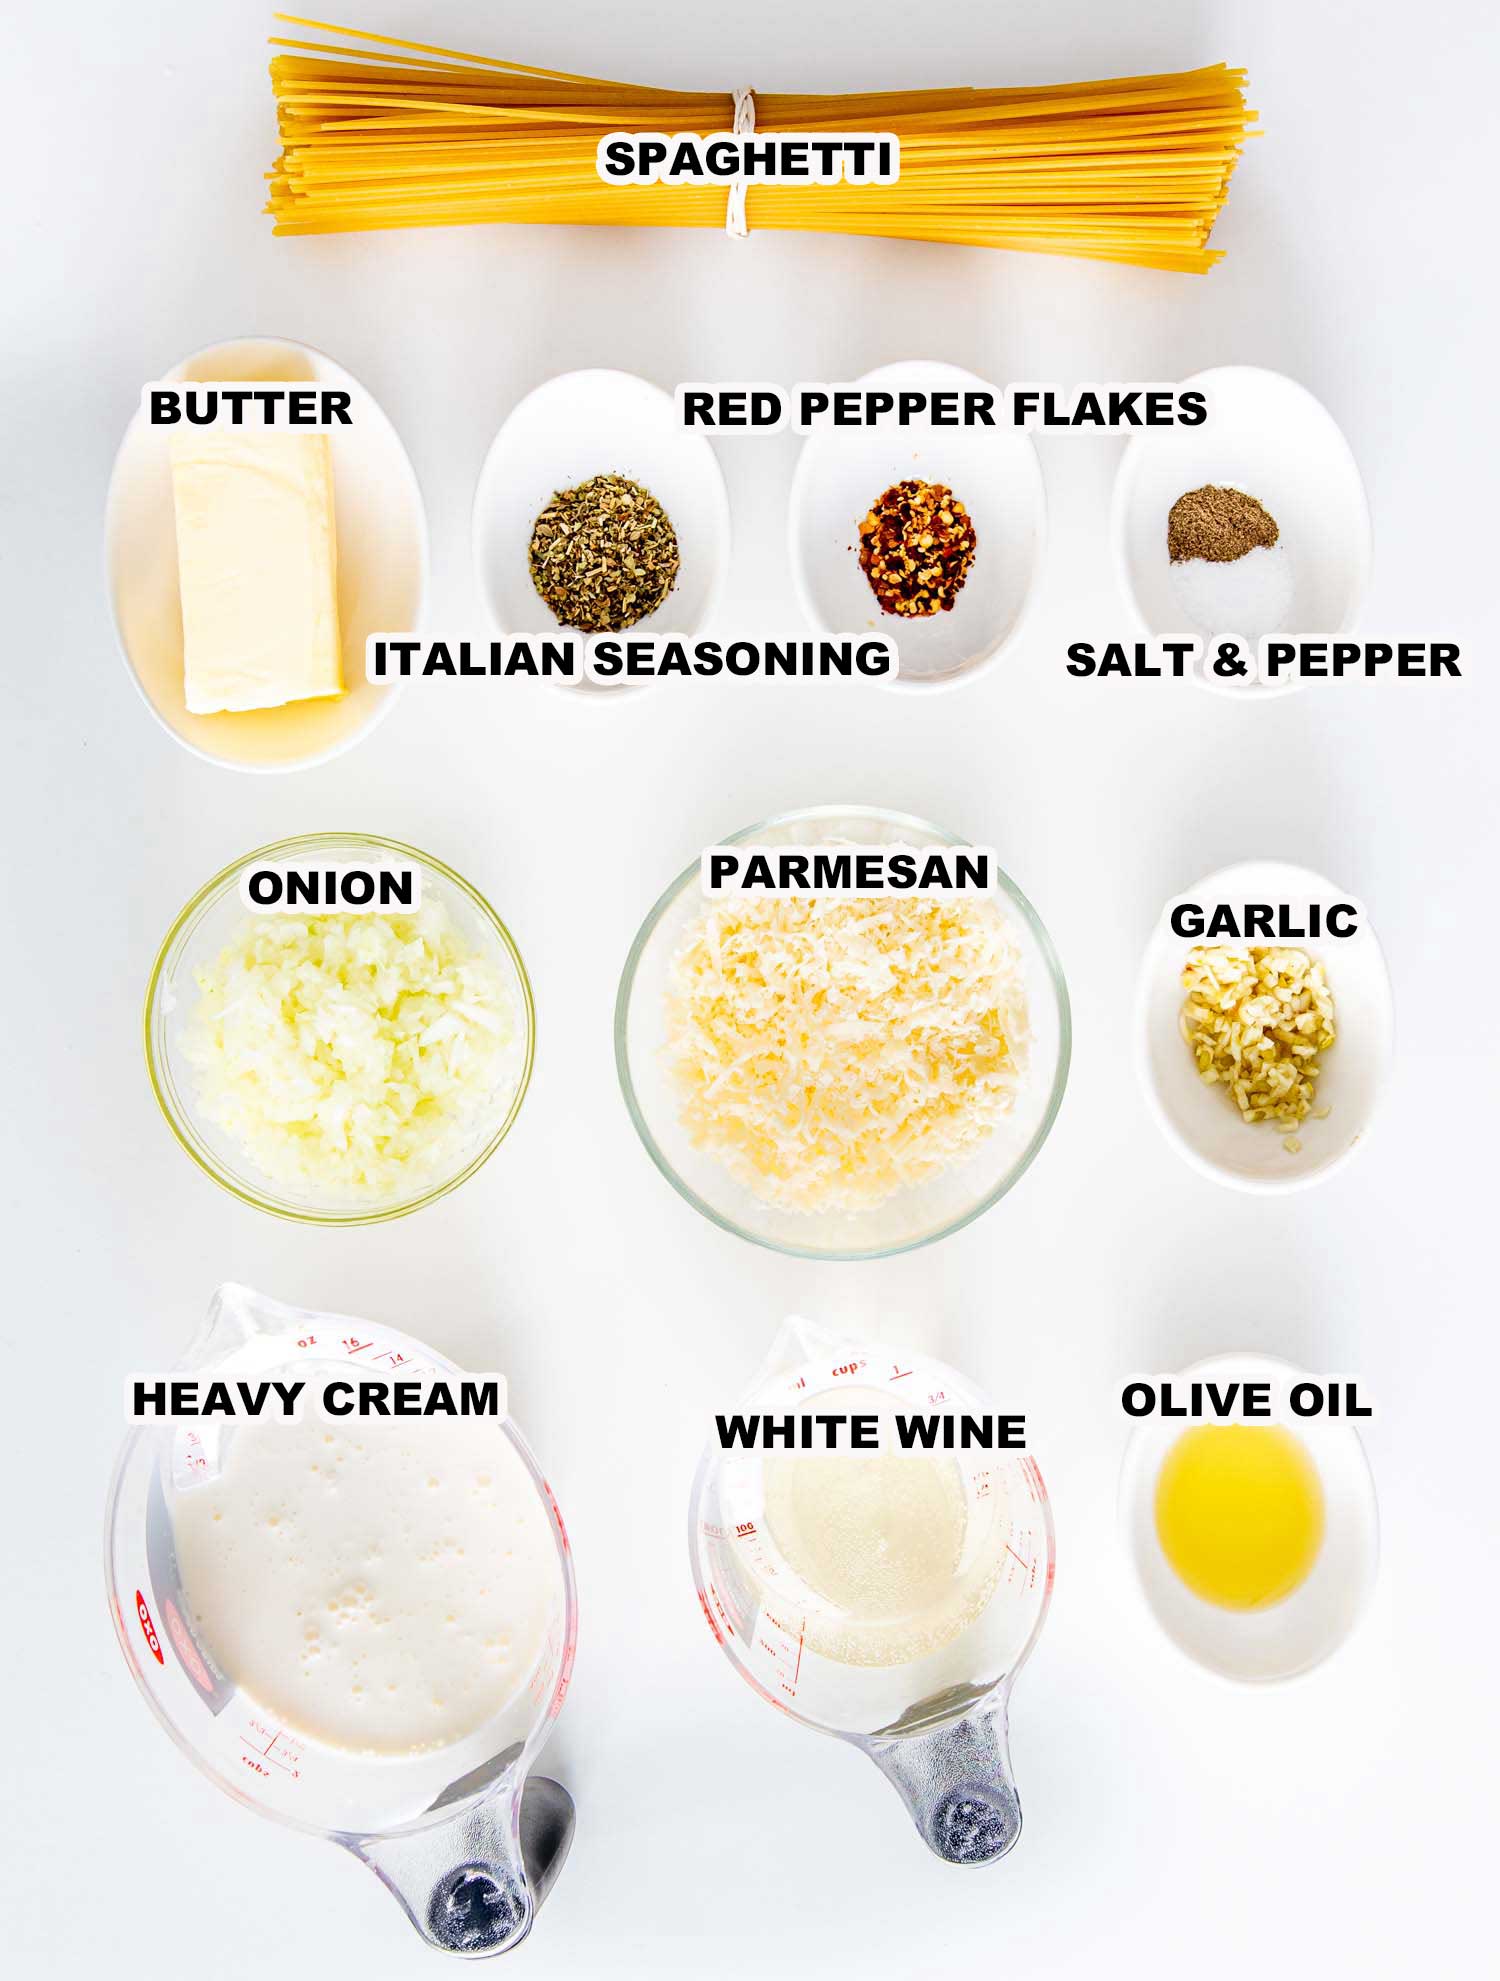 ingredients needed to make creamy garlic butter spaghetti.